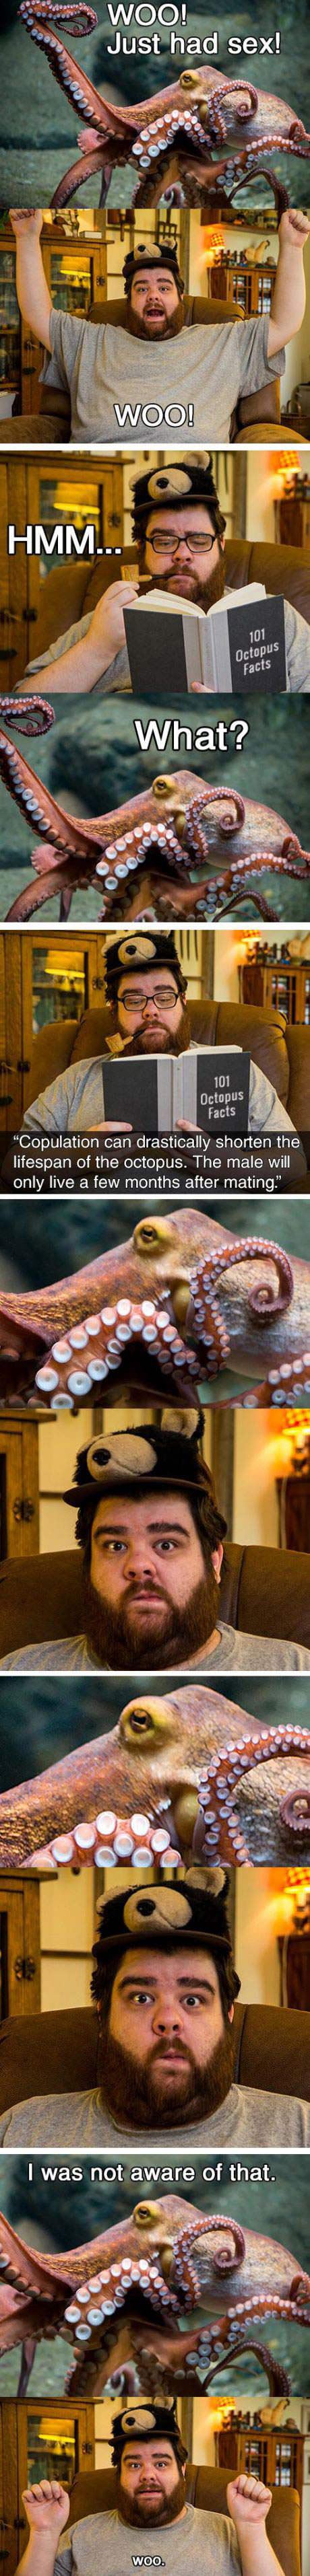 [Image: Octopus.jpg]